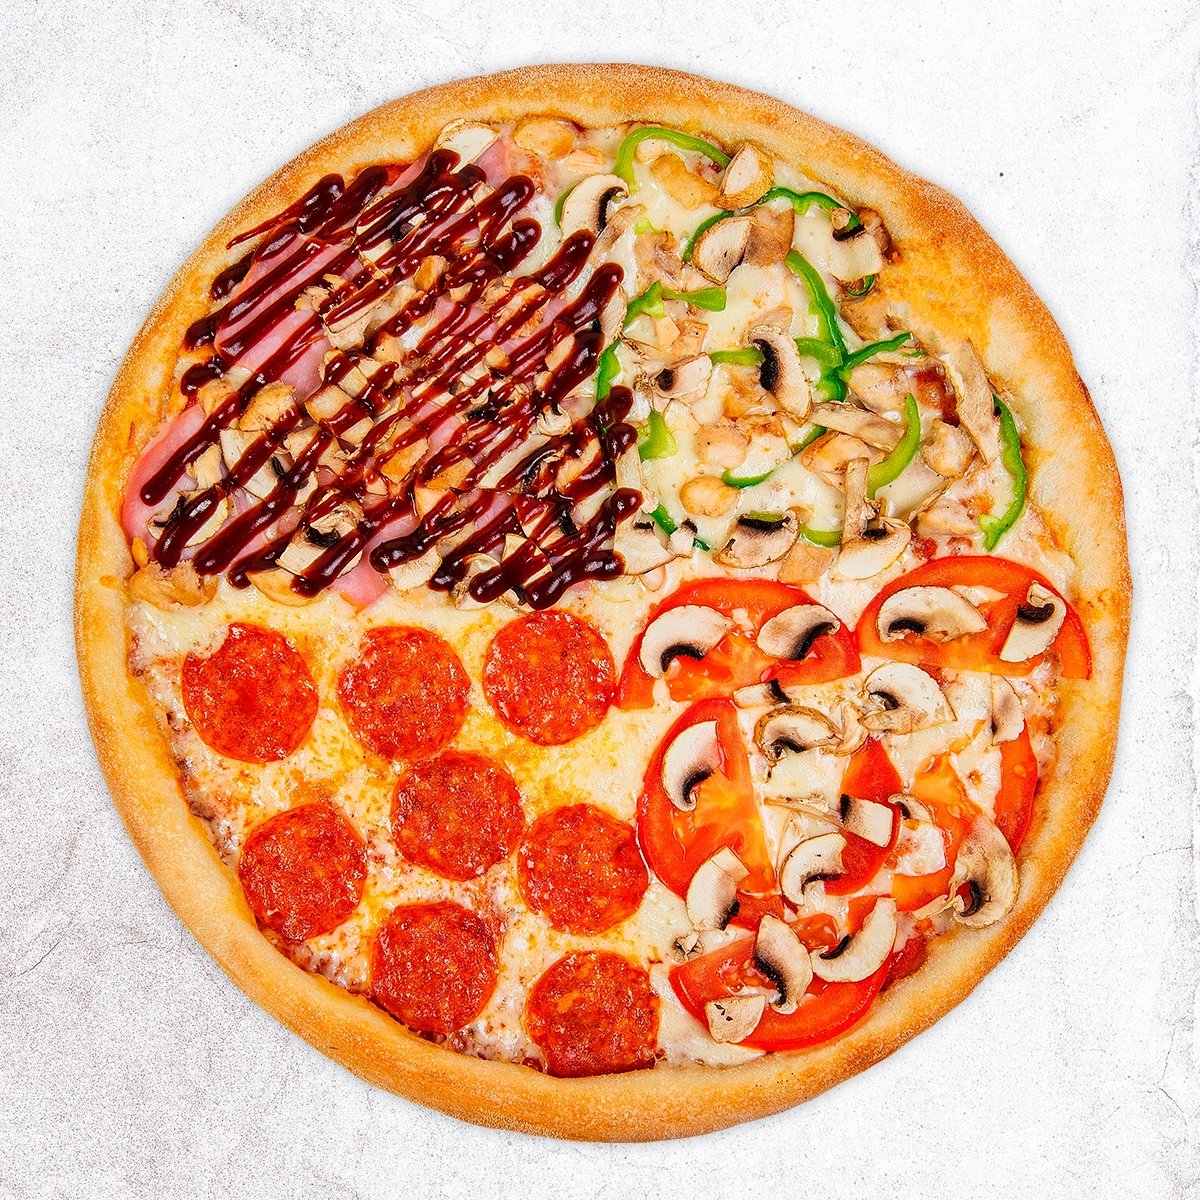 пицца четыре сезона рецепт с фото пошагово фото 101